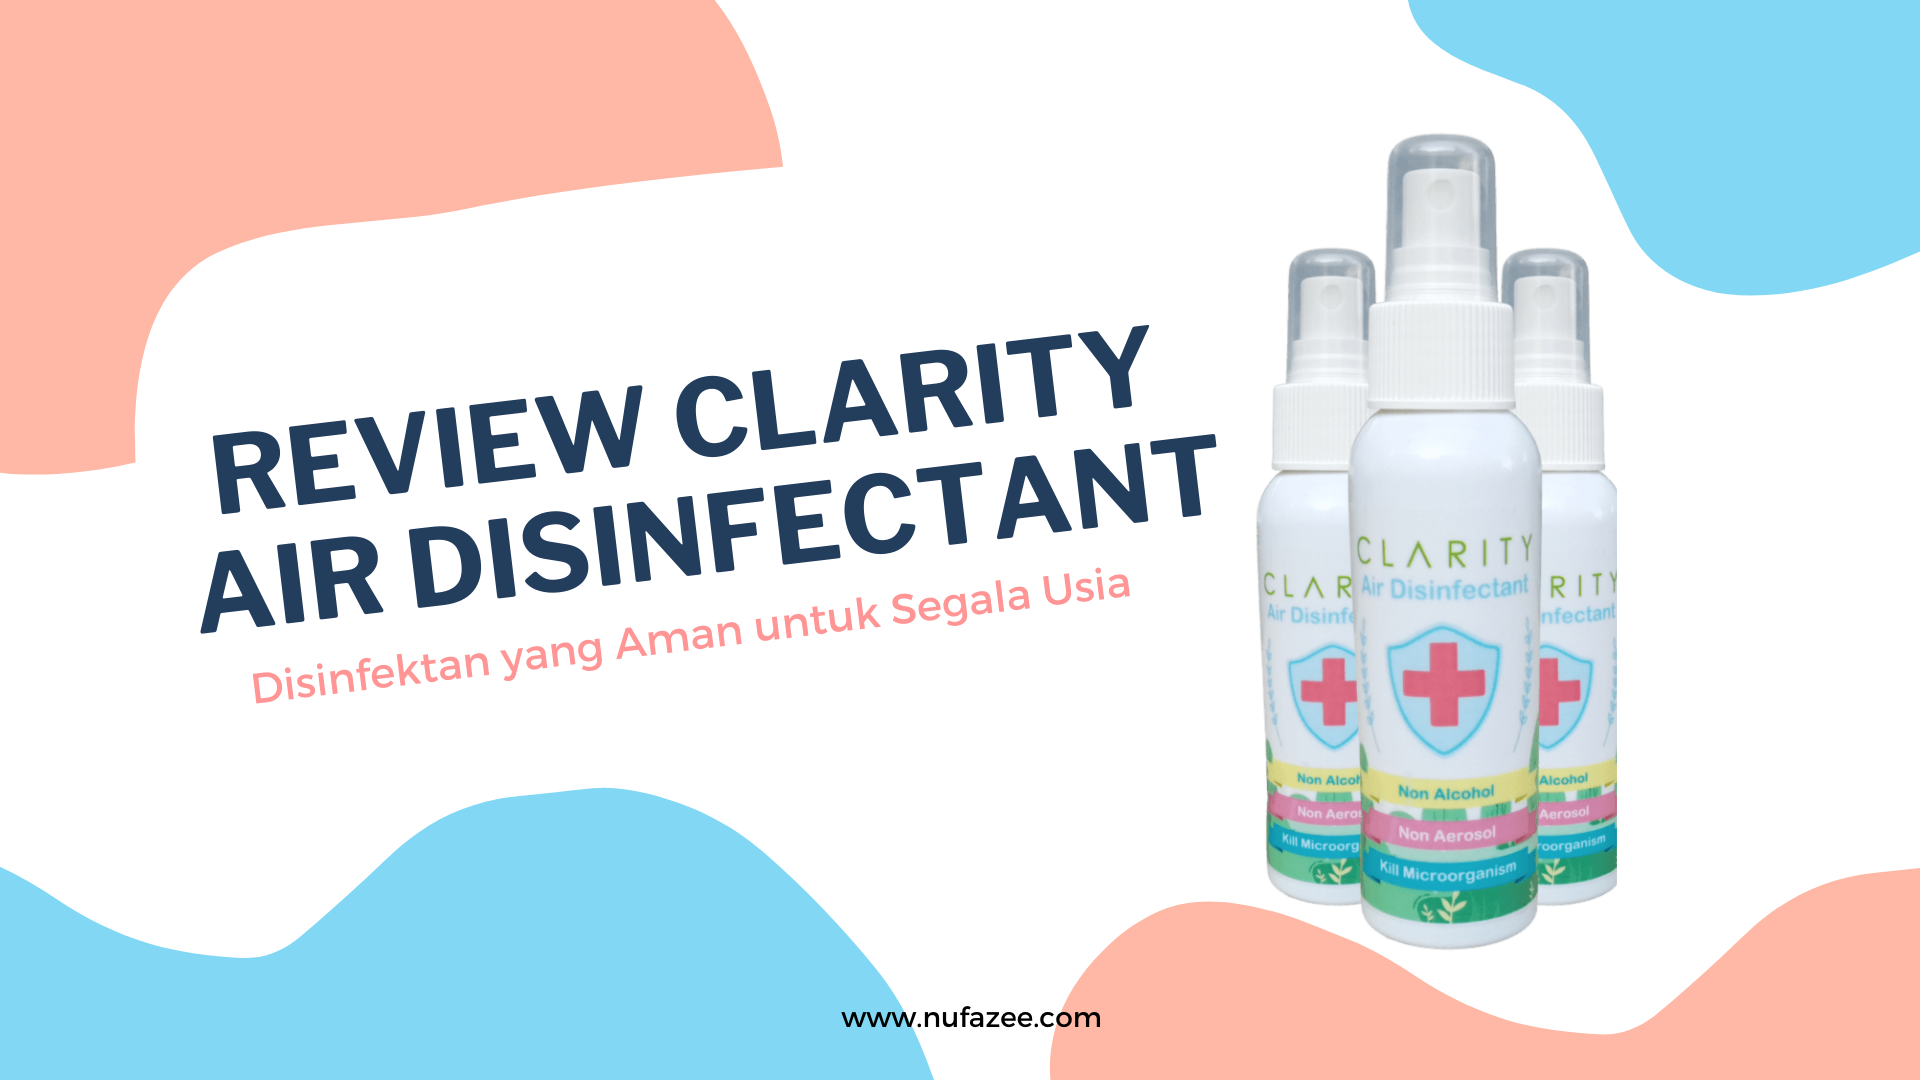 Clarity Air Disinfectant